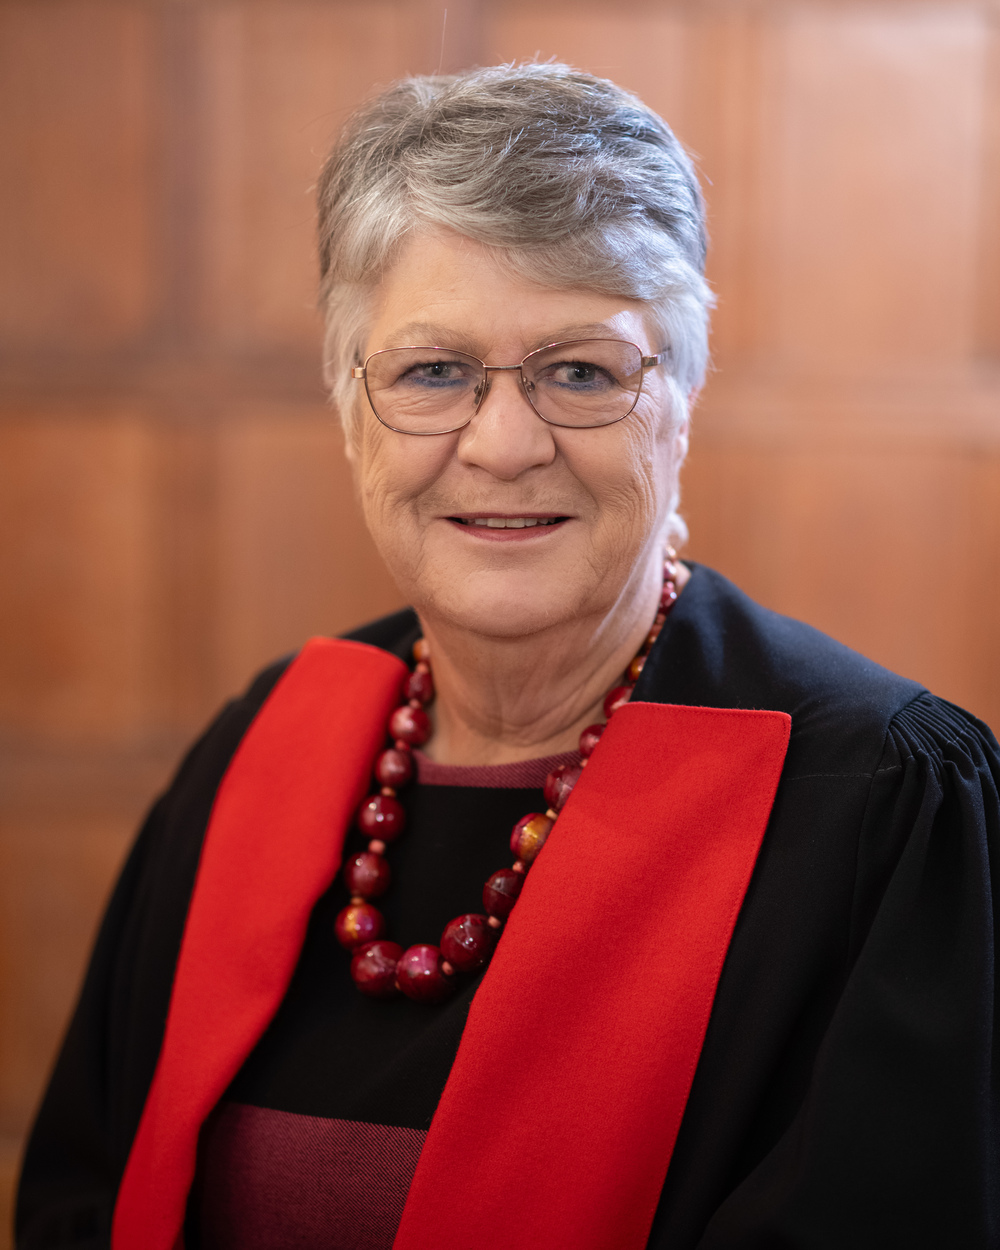 Professor Jane Clarke